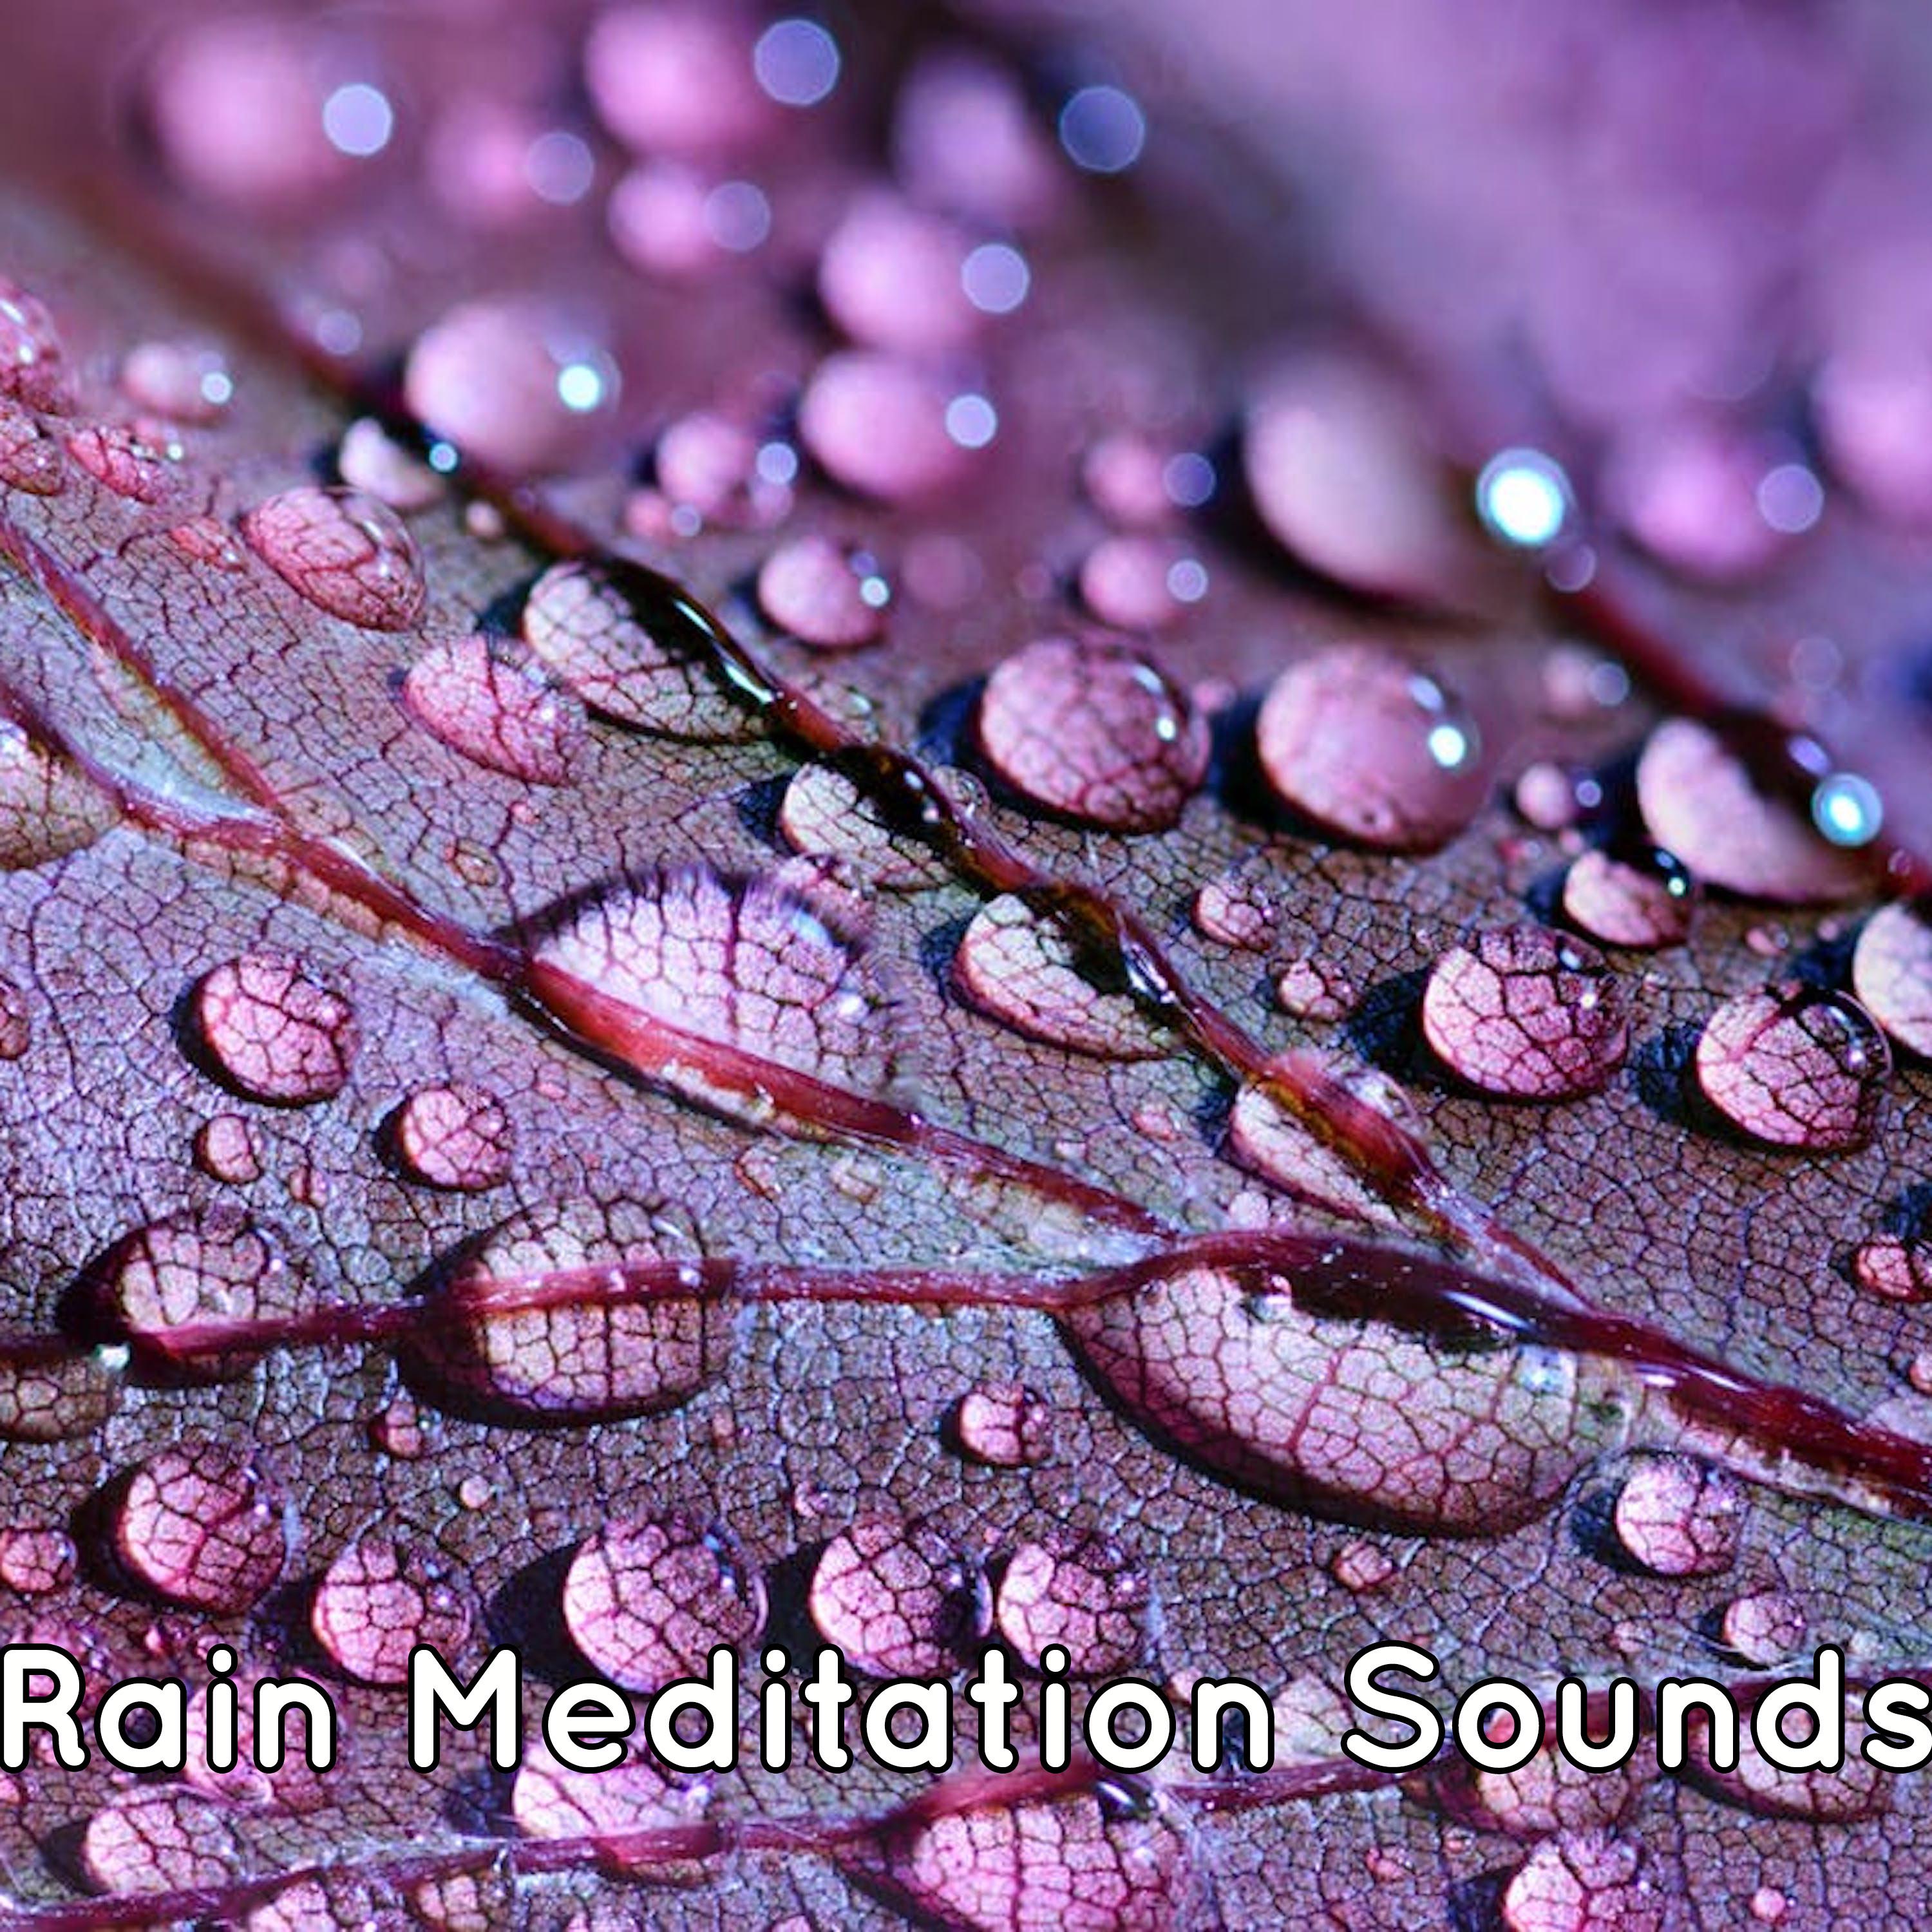 19 Rain Meditation Sounds - Mindfullness, Yoga, Relaxation and Spa